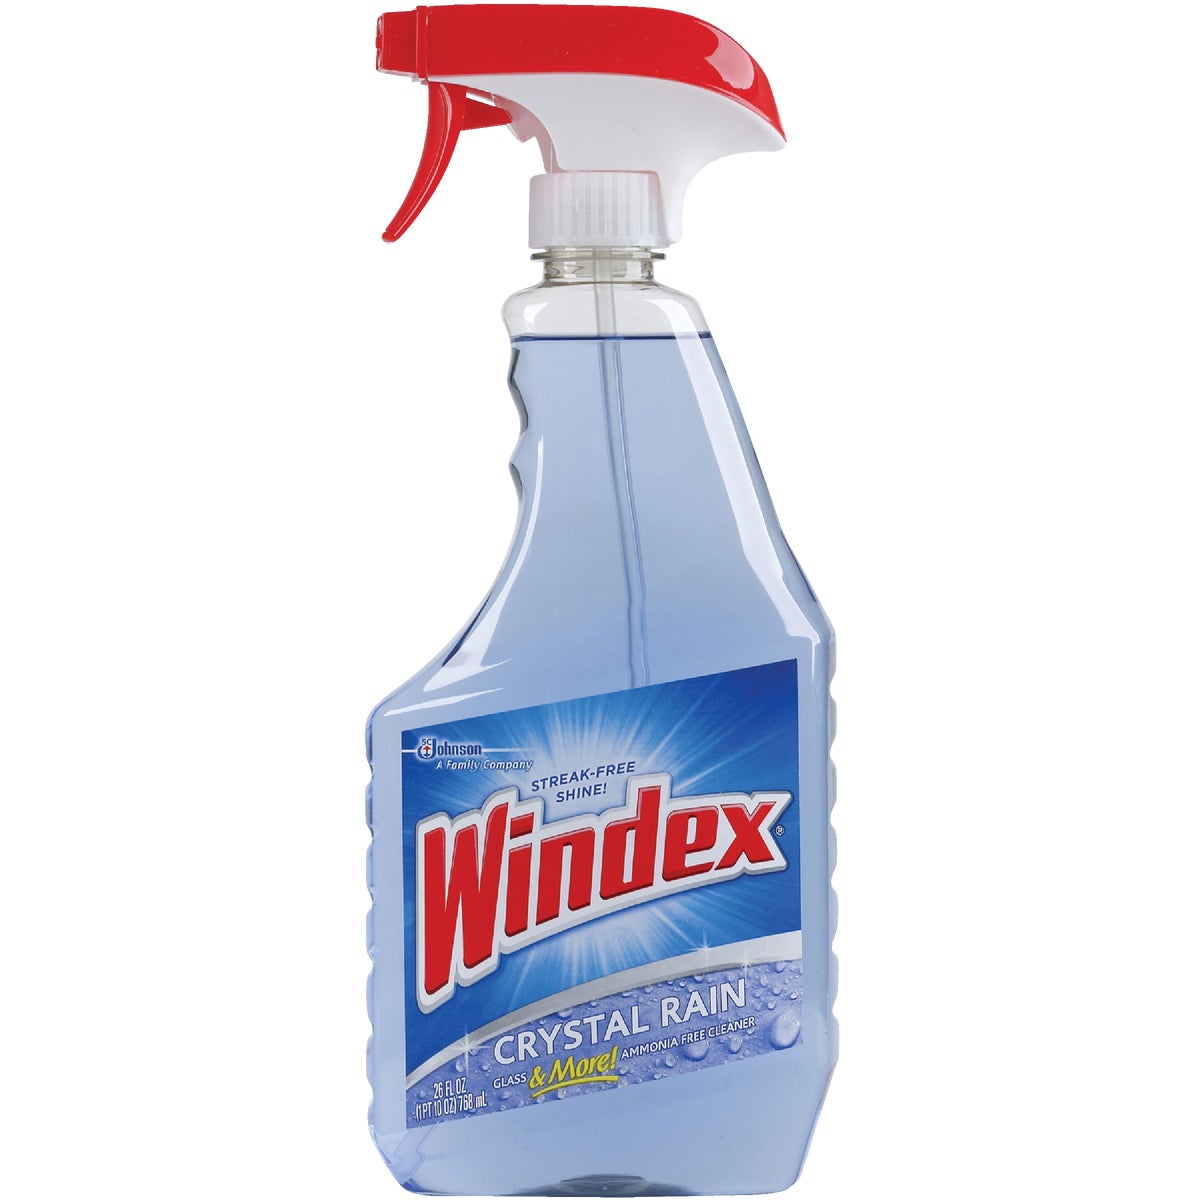 Windex Crystal Rain 23 Oz. Glass & Surface Cleaner